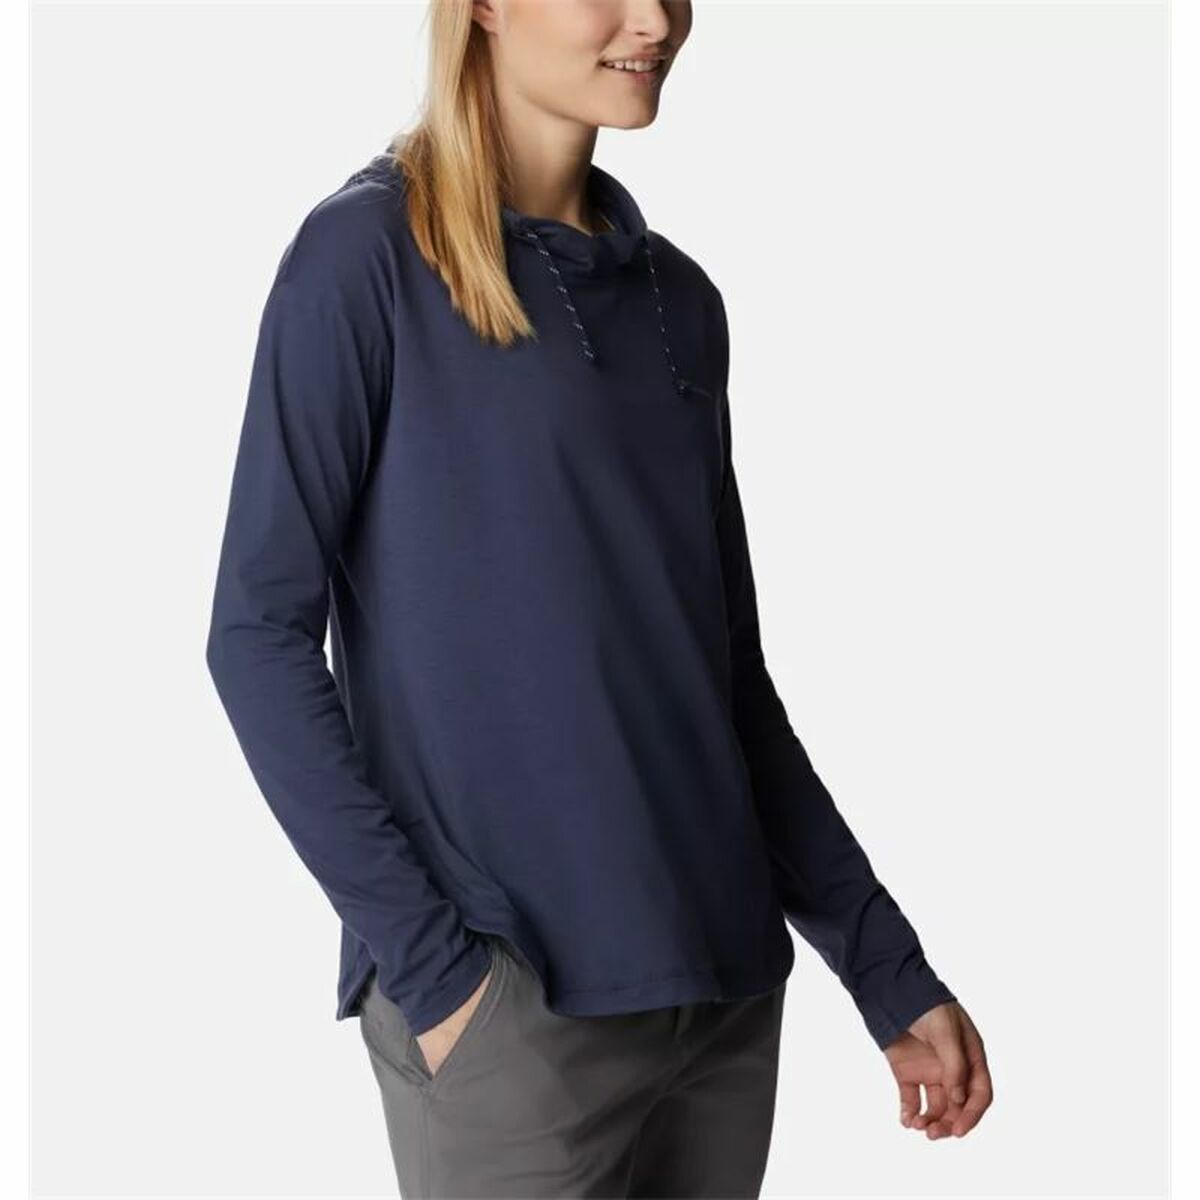 Kaufe Damen Sweater mit Kapuze Columbia Sun Trek™ Marineblau bei AWK Flagship um € 57.00